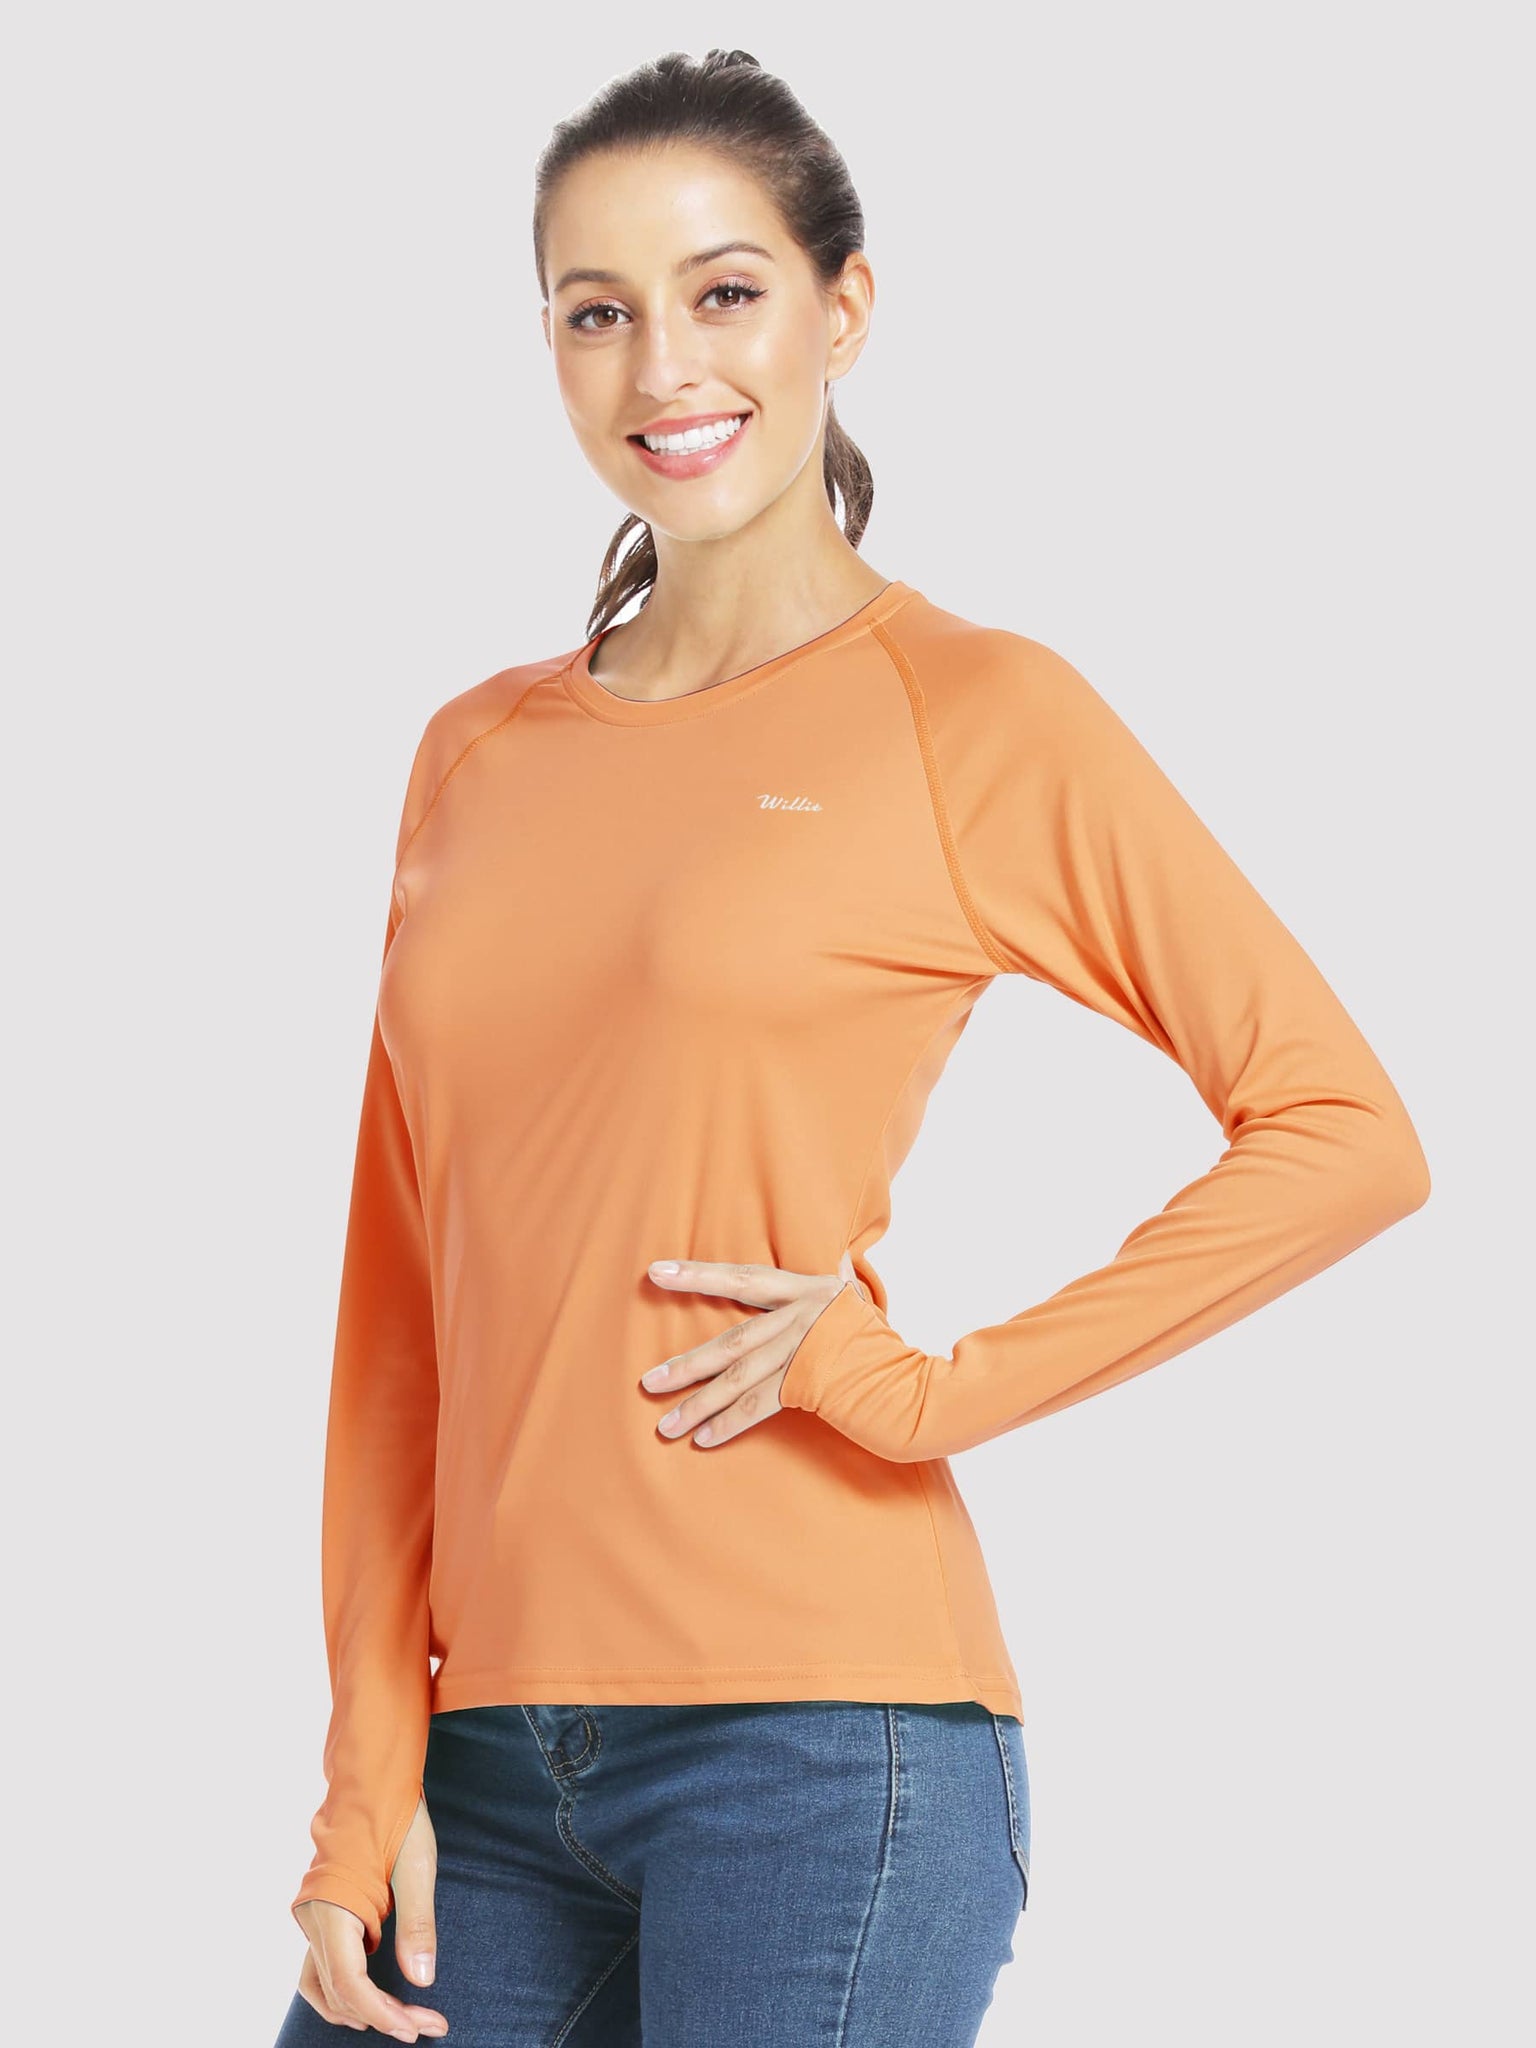 Women's Sun Protection Shirt Long Sleeve UPF 50+